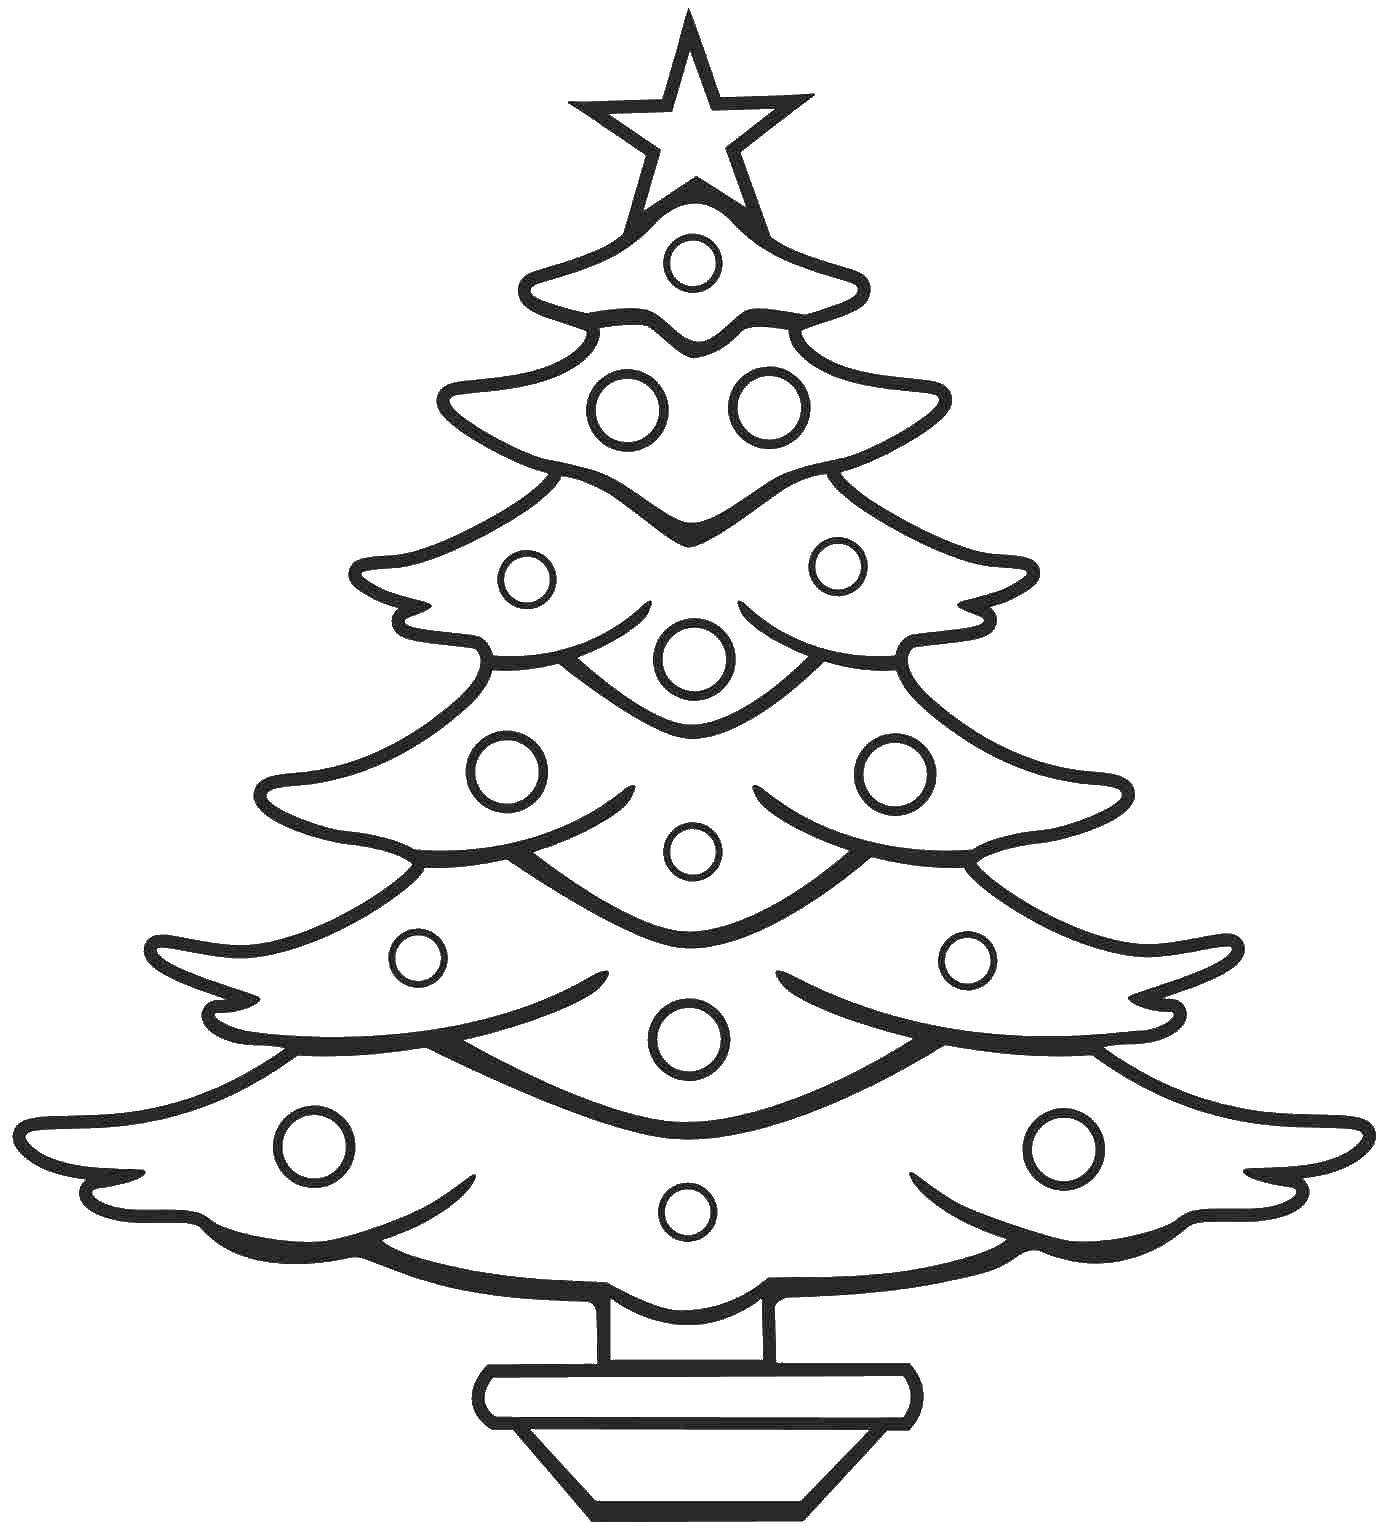 Coloring Christmas tree. Category Christmas. Tags:  Christmas, tree, new year.